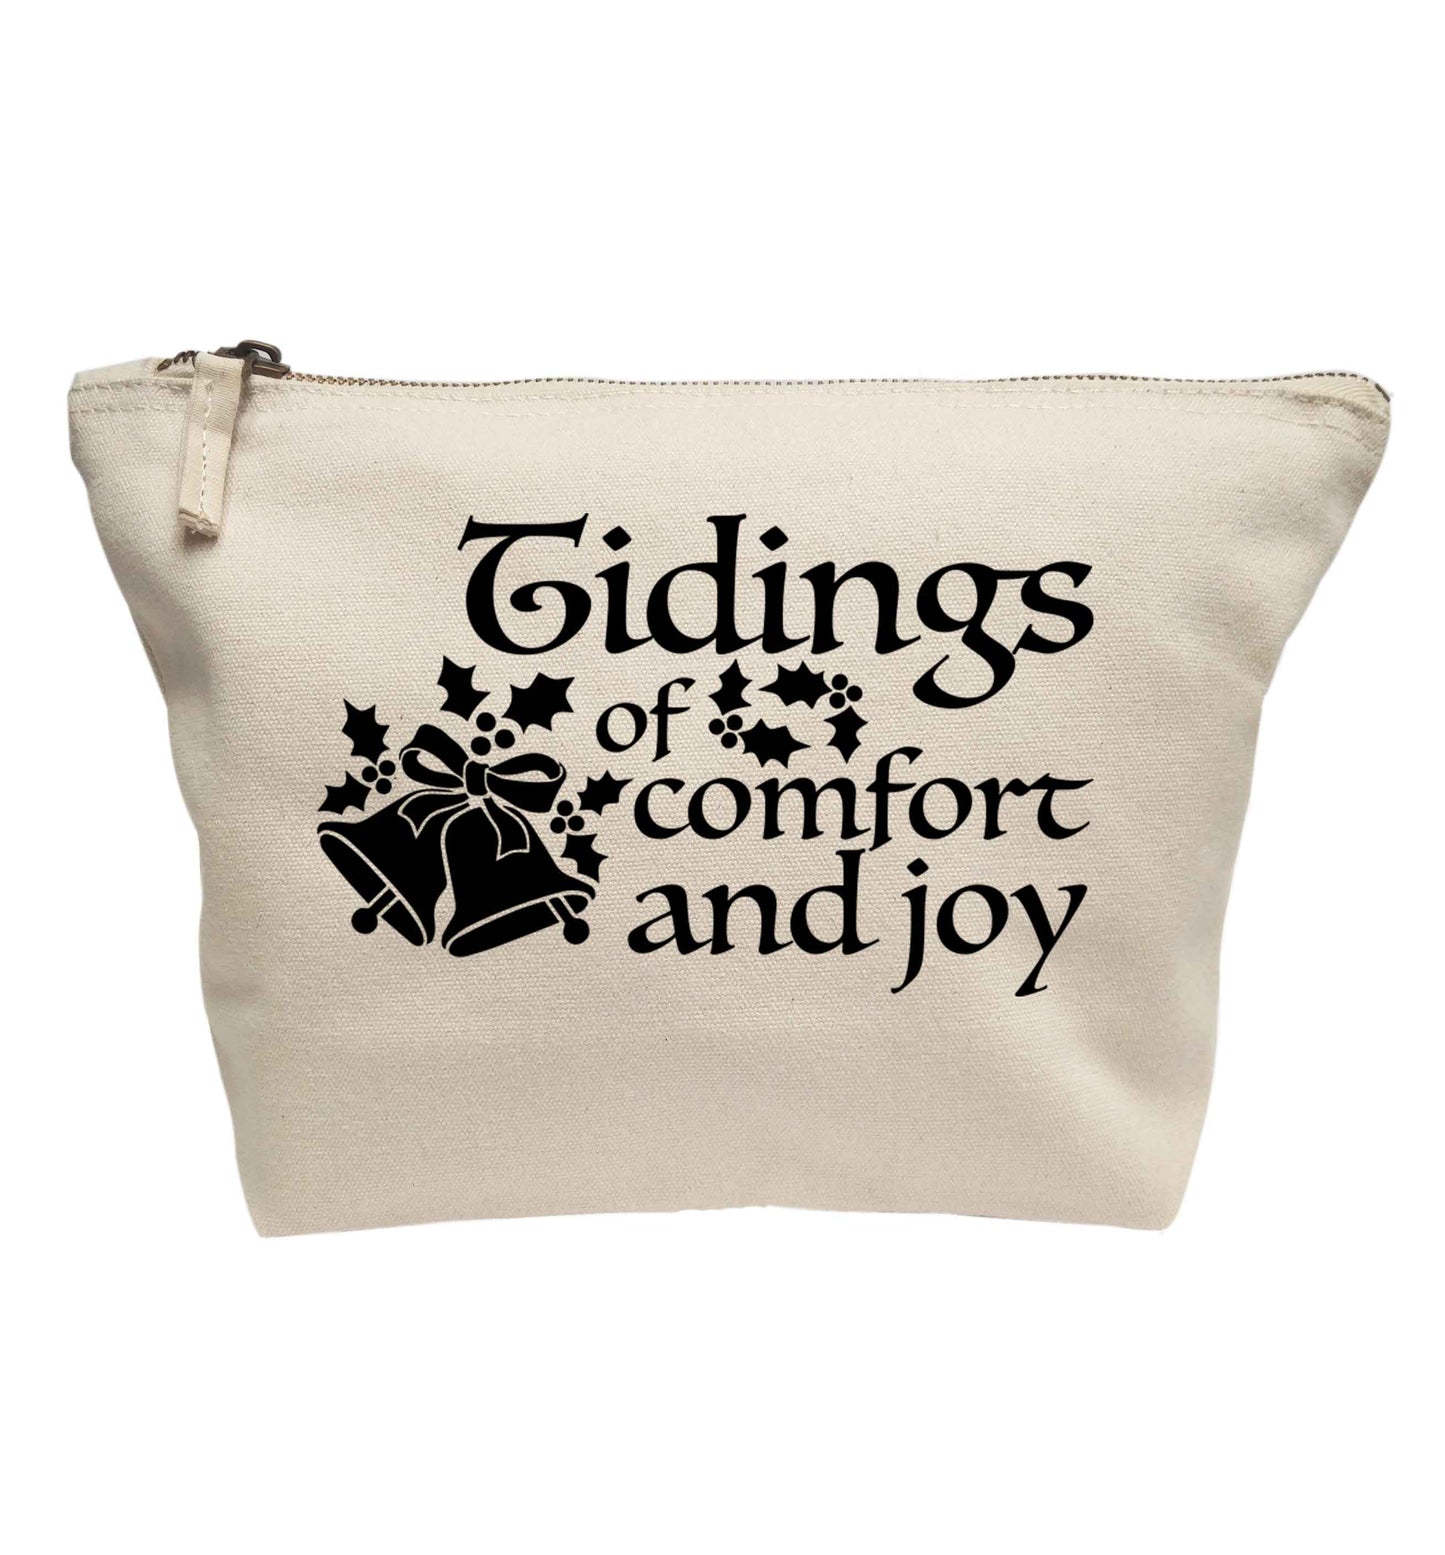 Tidings of comfort and joy | makeup / wash bag